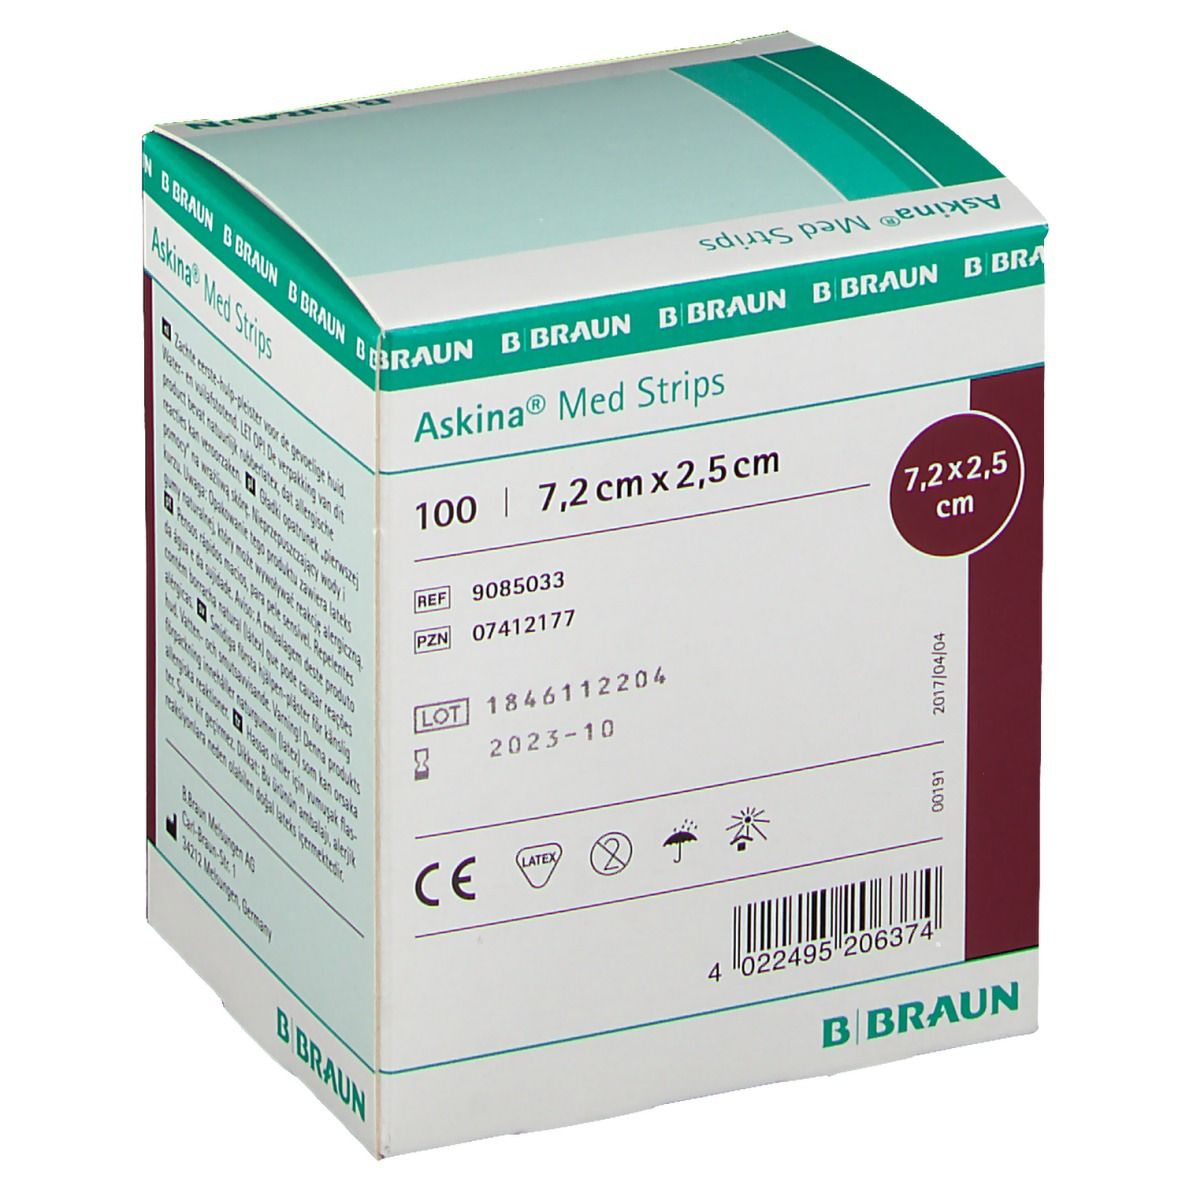 Askina® Med Strips 2,5 x 7,2 cm